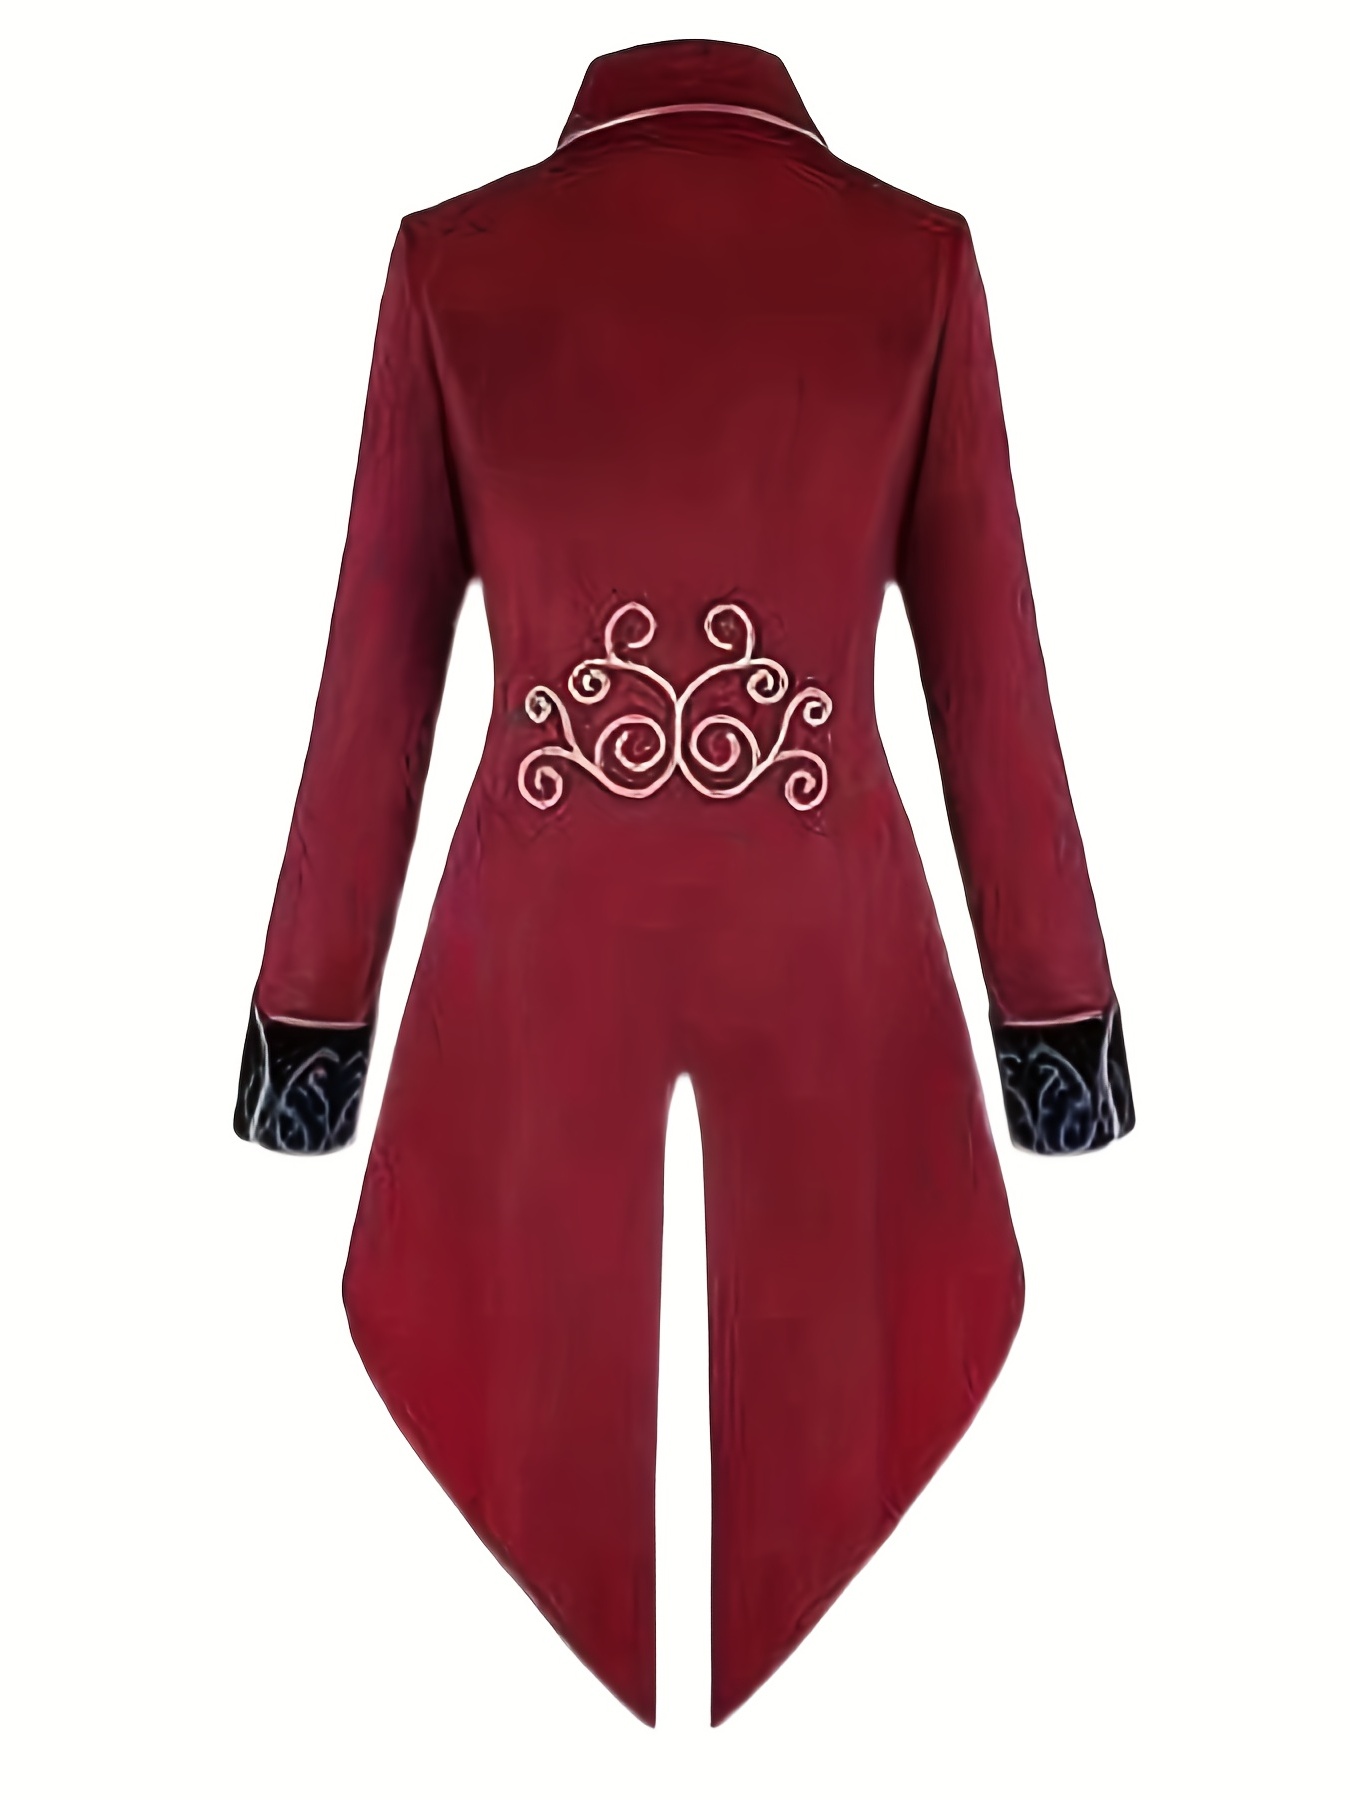 Xysaqa Men's Fashion Steampunk Vintage Tailcoat Jacket Gothic Victorians  Frock Coat Medieval Uniform Halloween Costume 